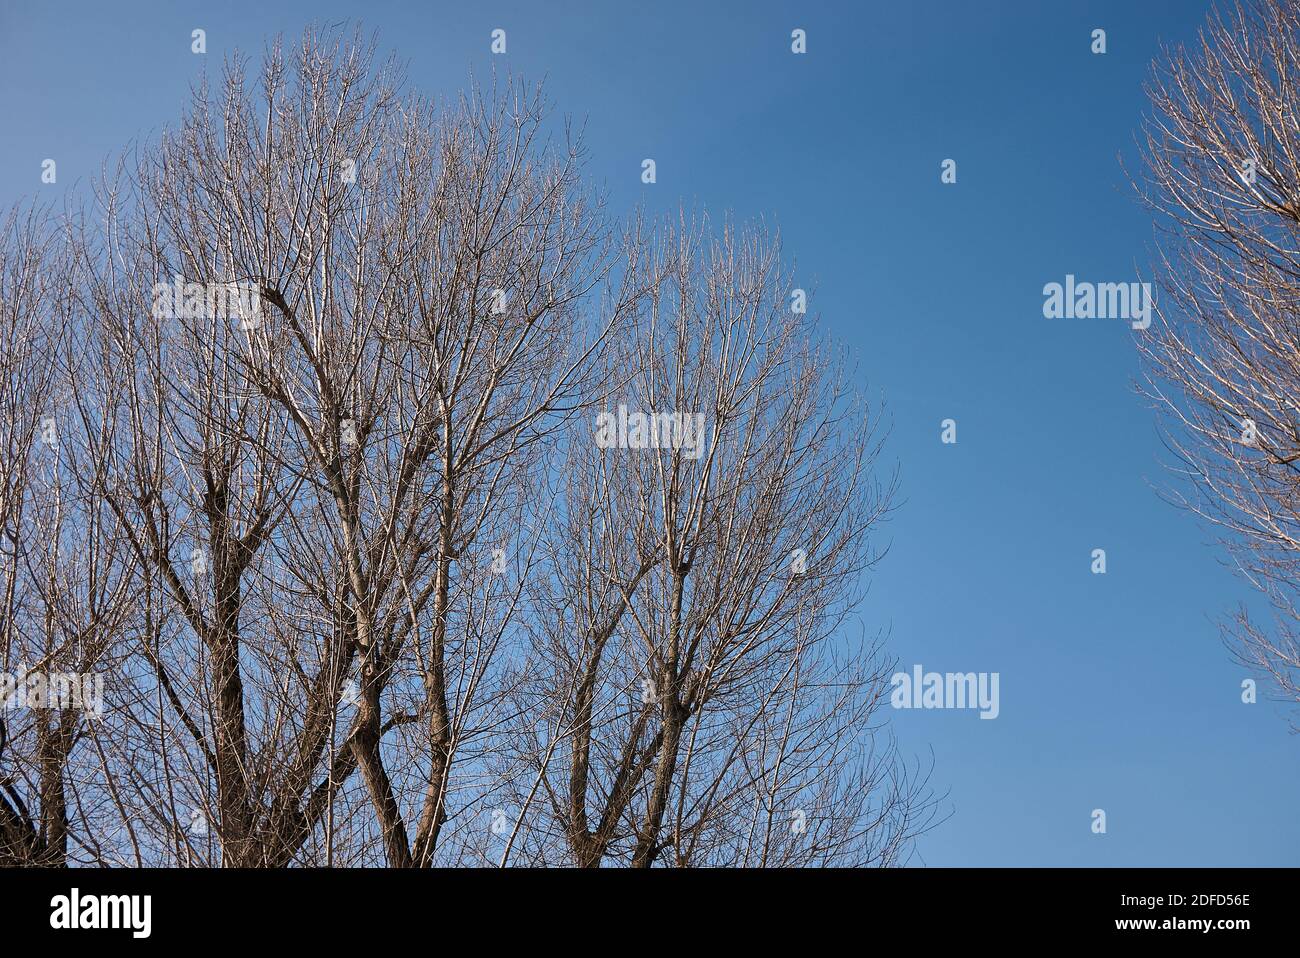 Populus canescens tree in winter season Stock Photo